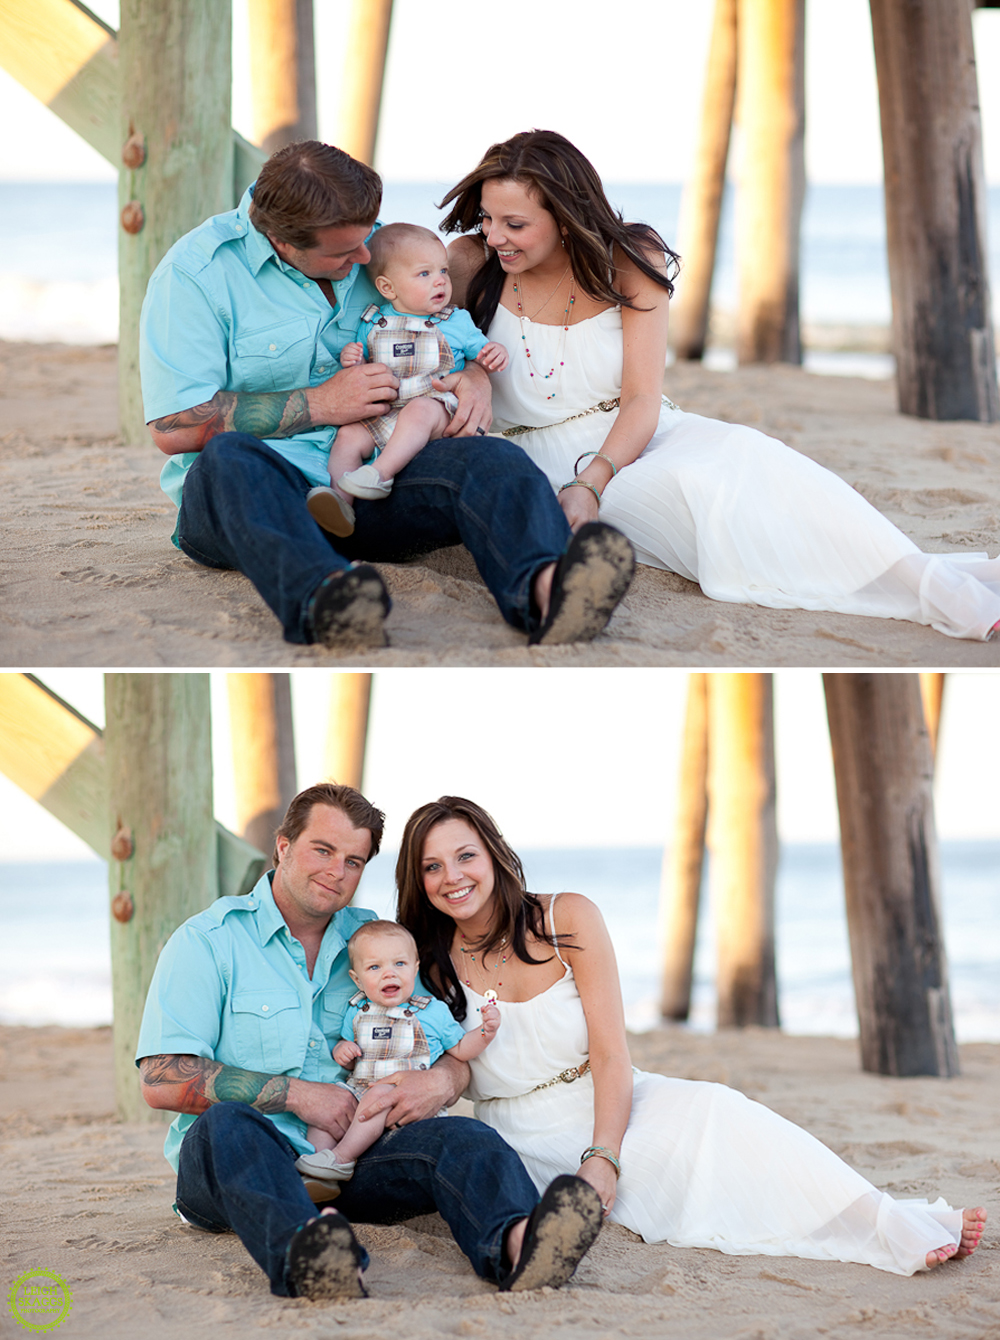 Virginia Beach Family Portrait Photographer ~The Mills Family Portraits~